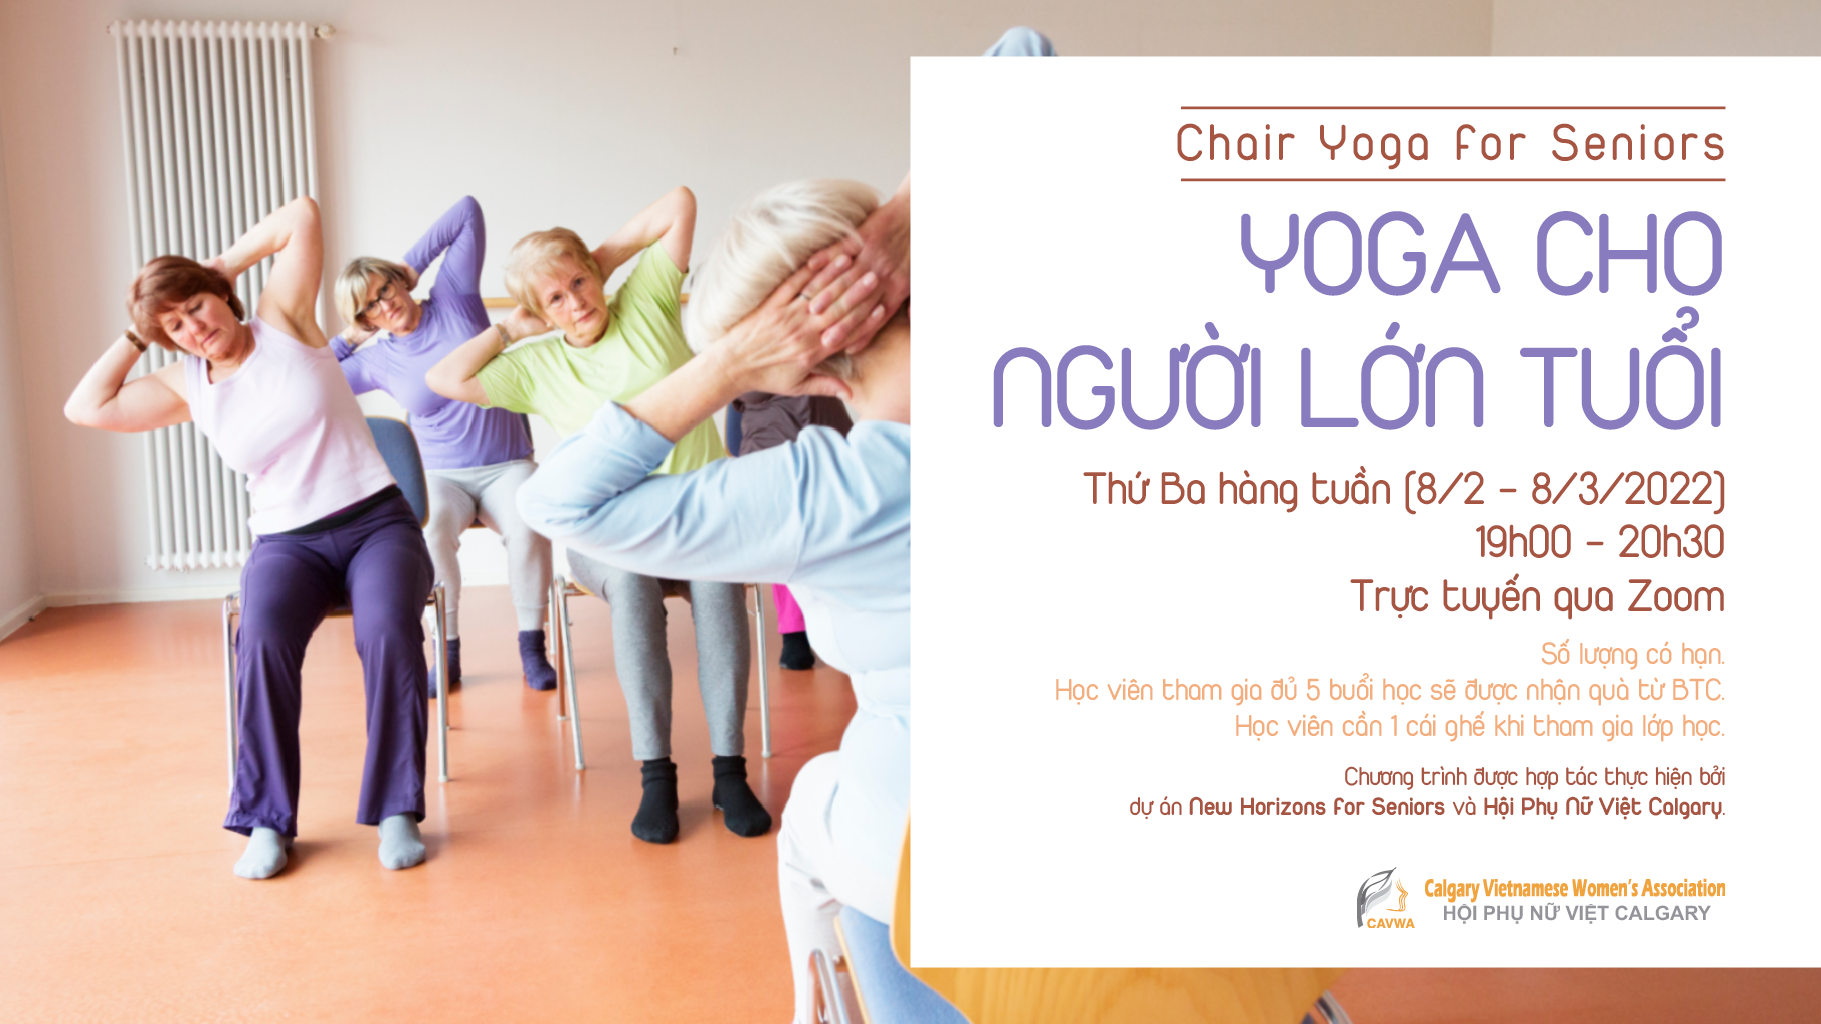 Featured image for “Lớp Học Yoga cho người lớn tuổi”